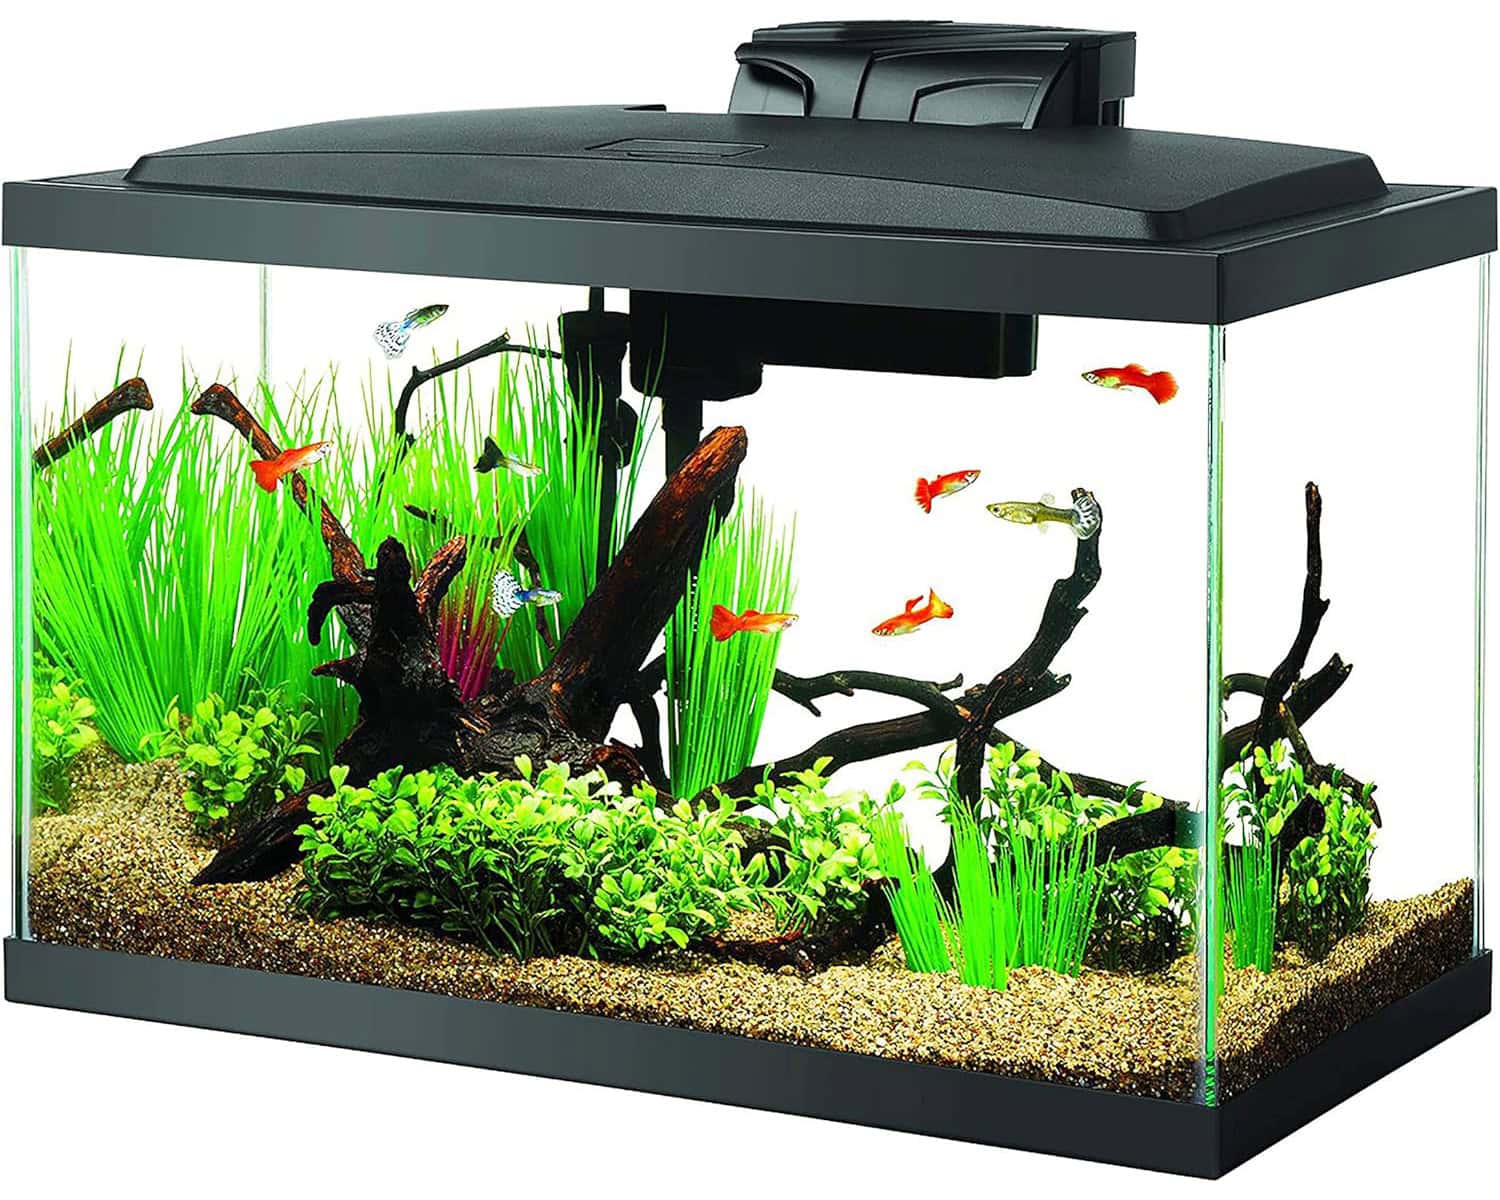 Aqueon Aquarium Fish Tank Starter Kit with LED Lighting 10 Gallon Fish Tank